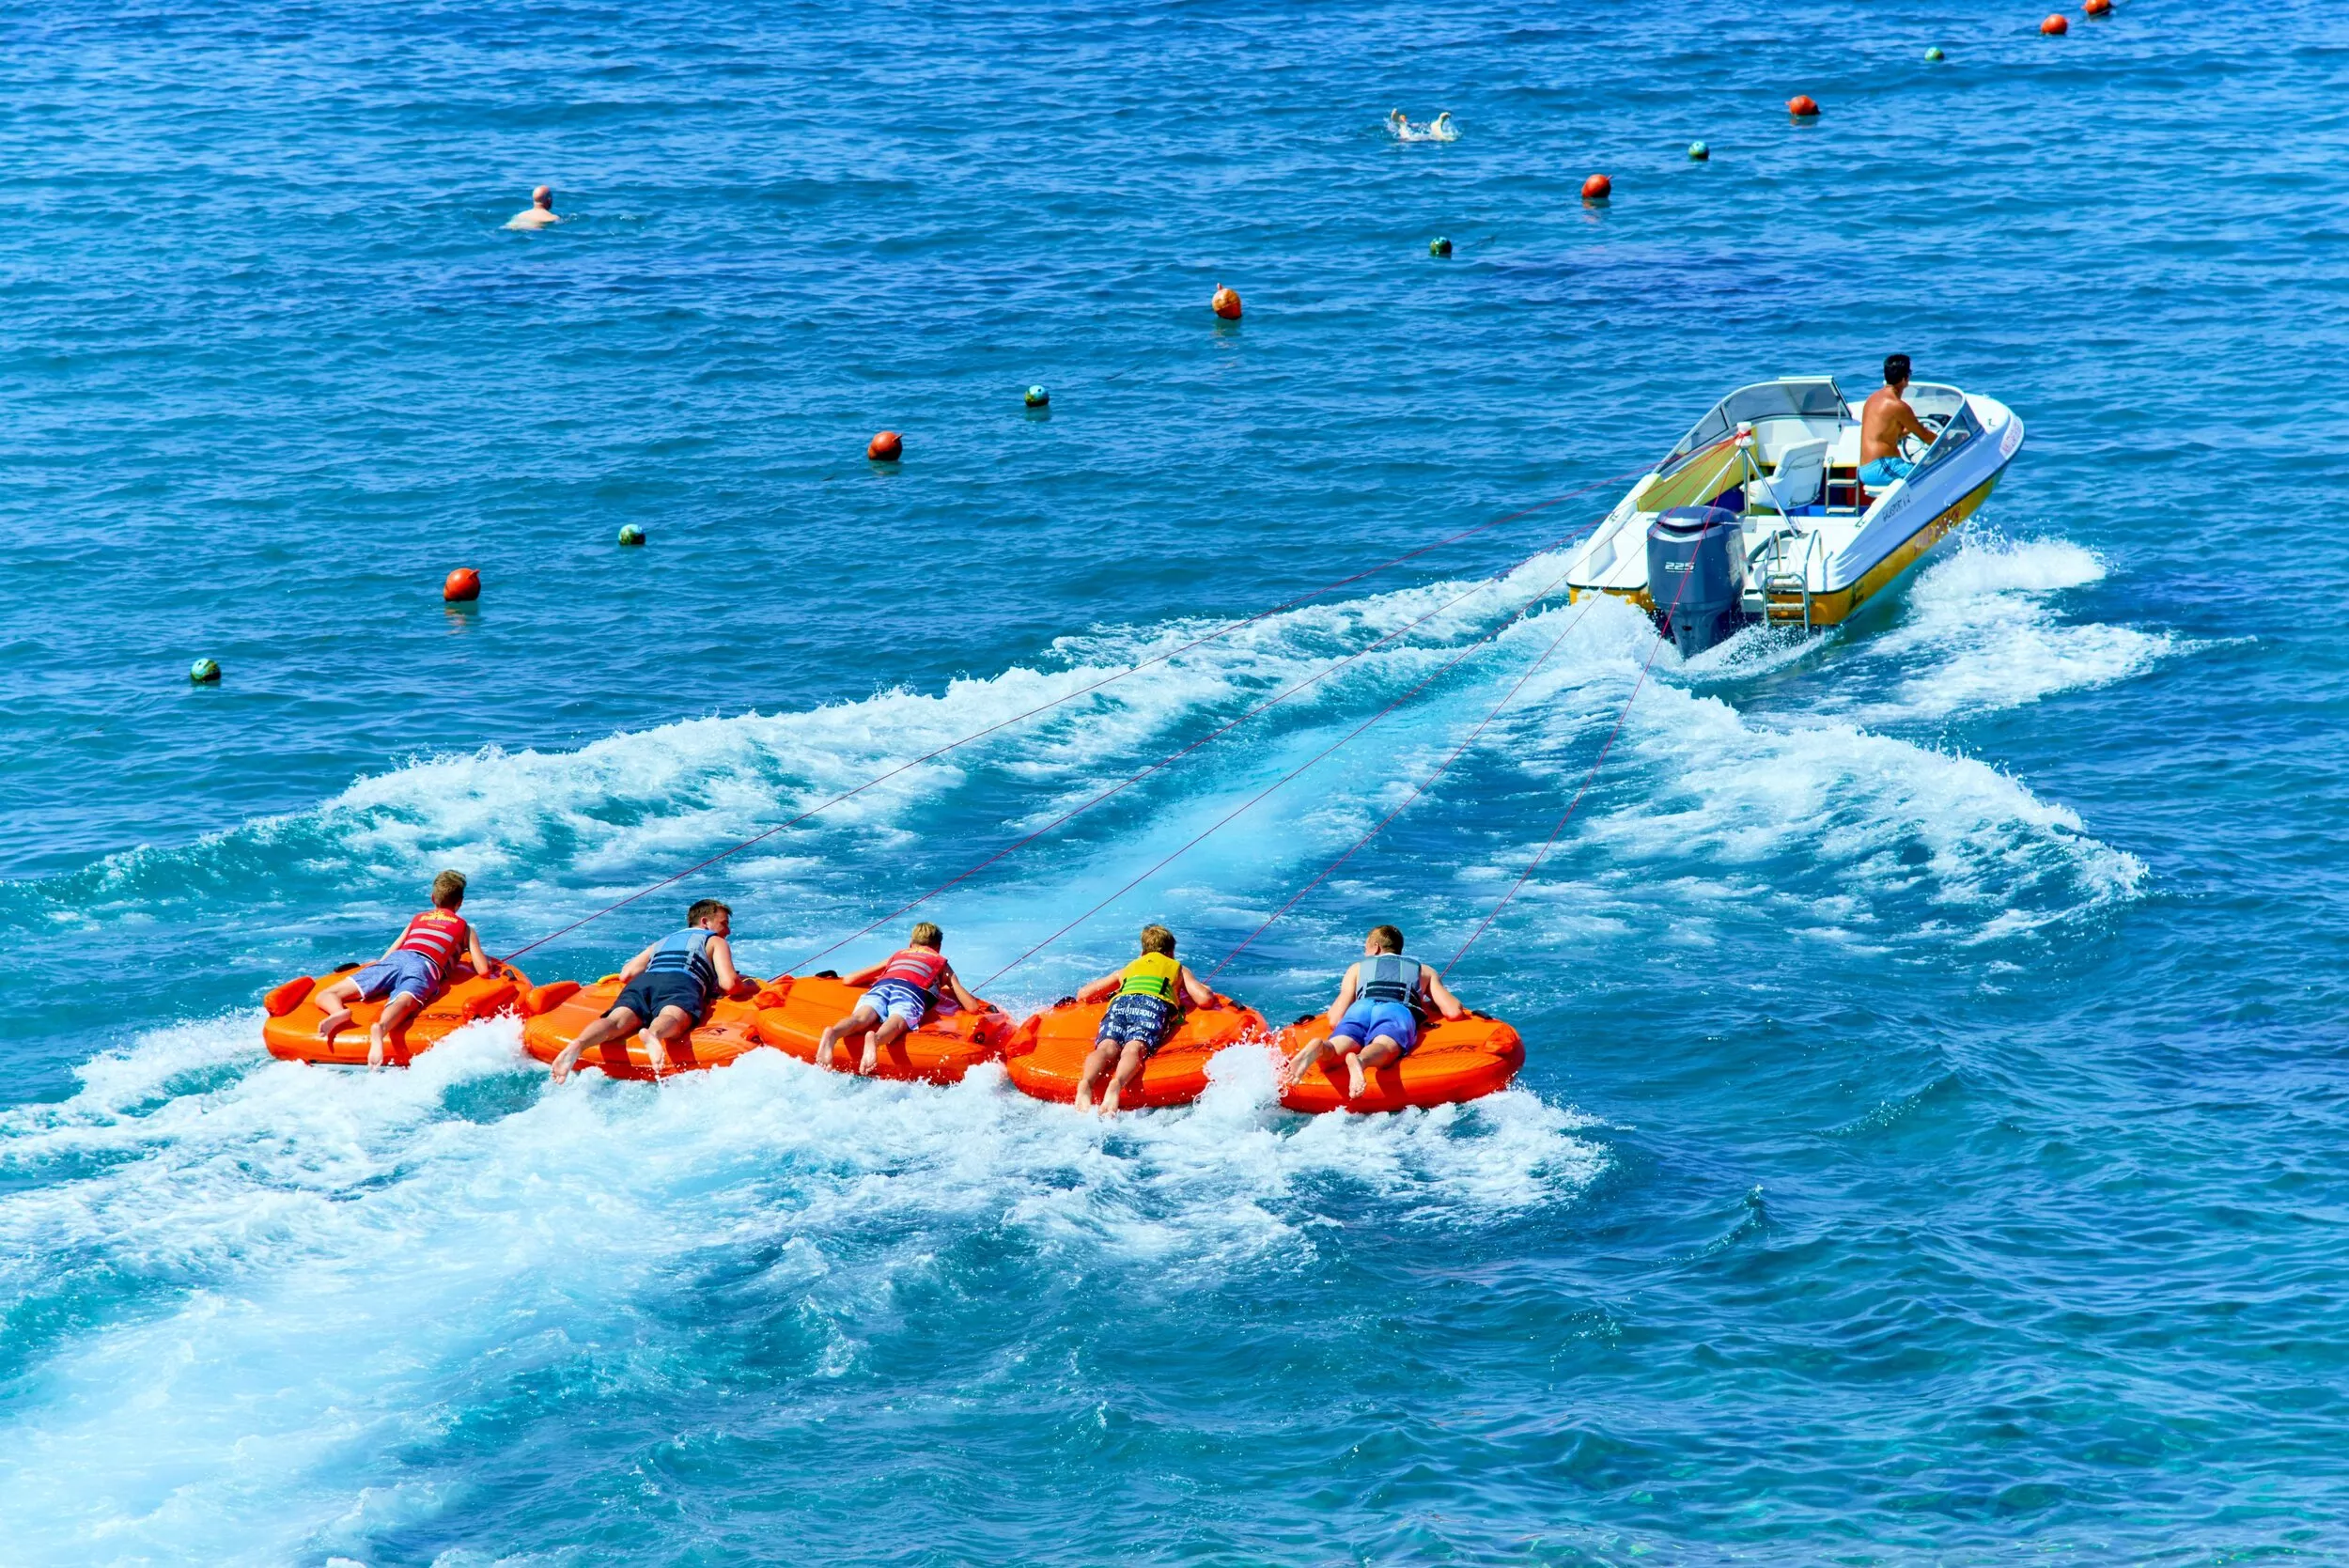 Aris Water Sports in Greece, Europe | Parasailing,Water Skiing,Jet Skiing - Rated 6